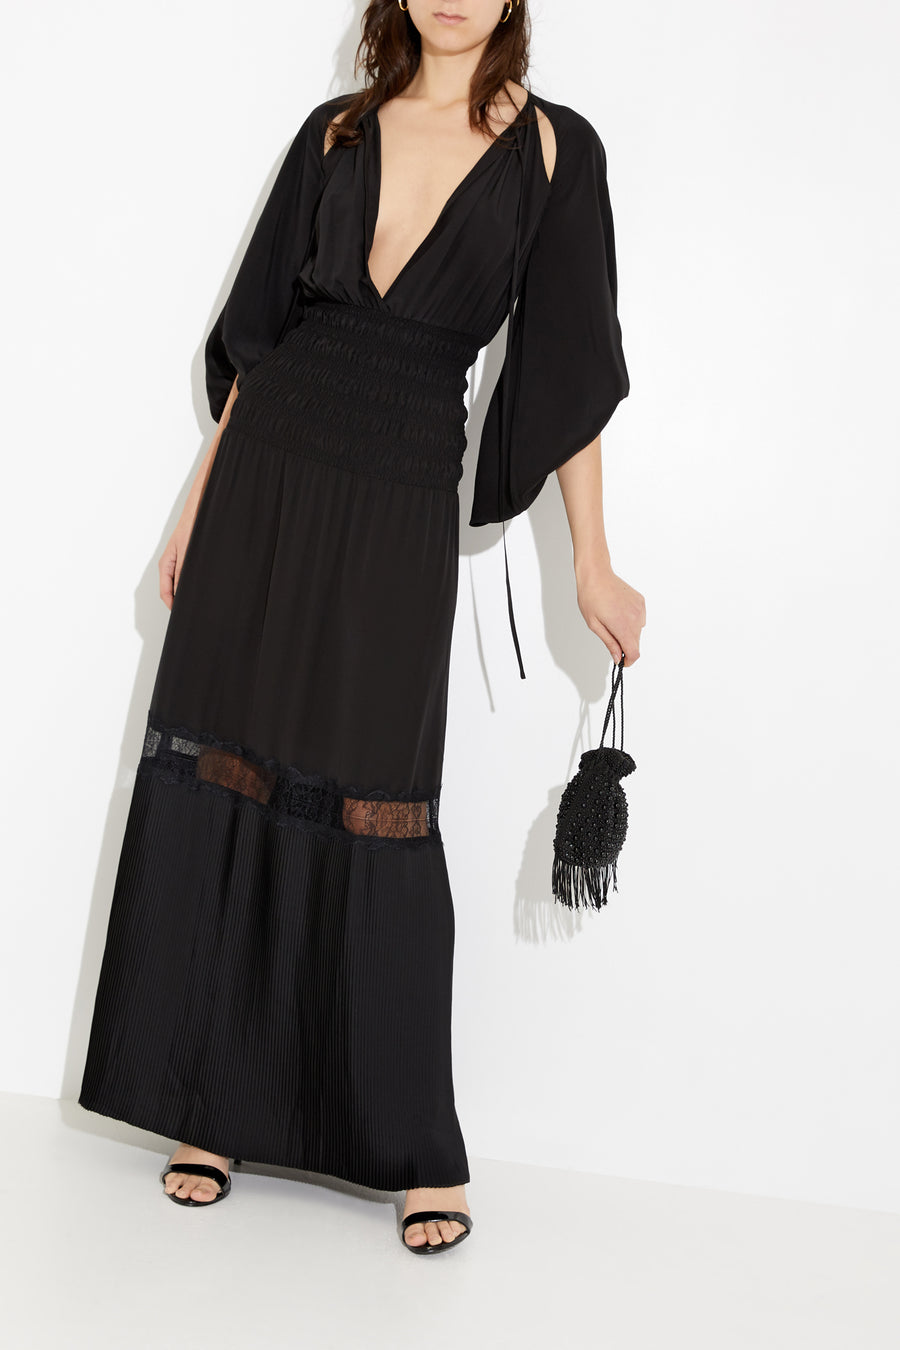 BELLA OSIRIS DRESS {BLACK}